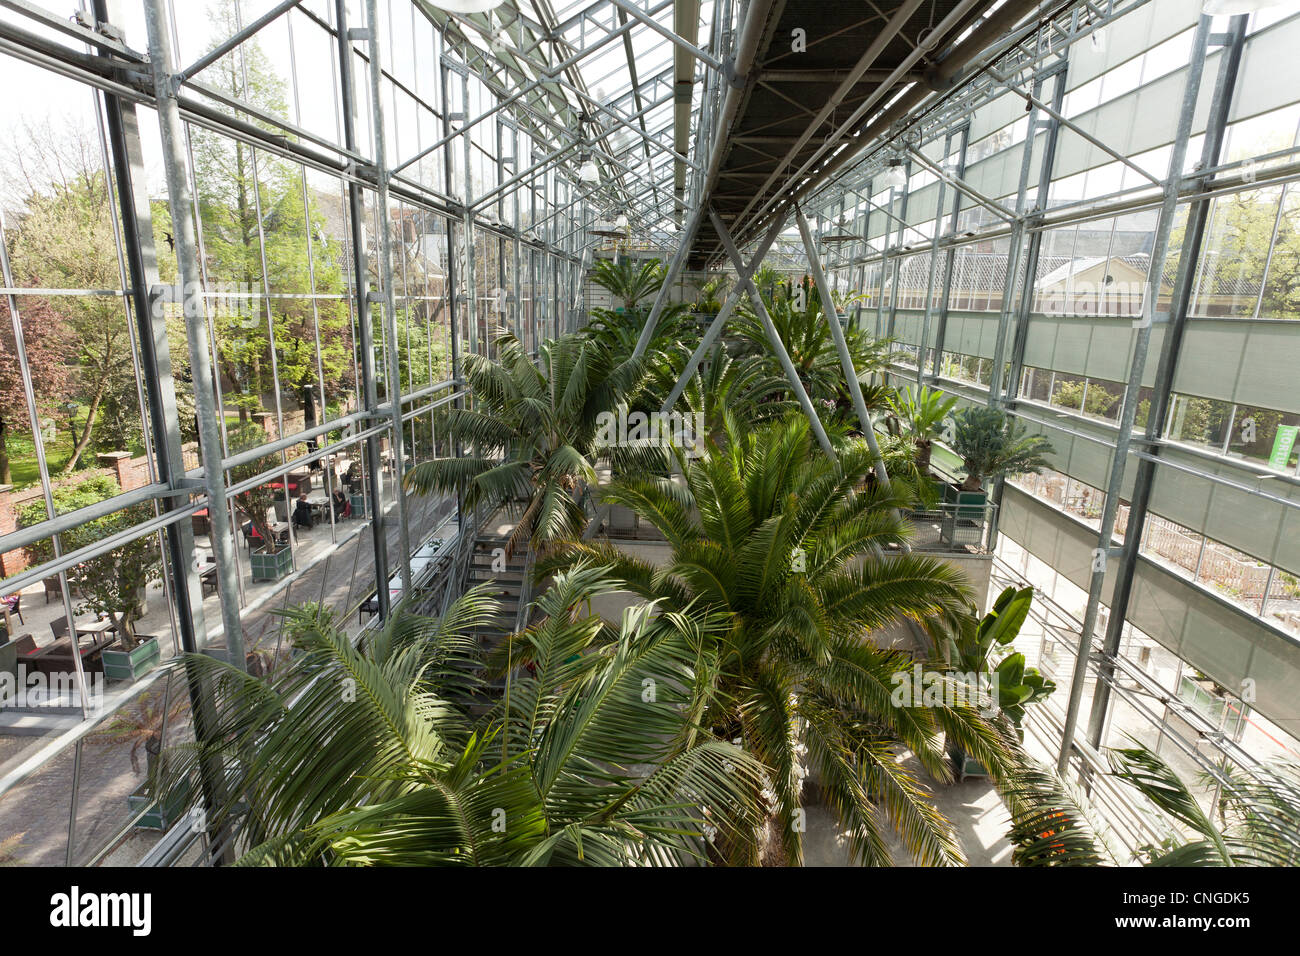 Holland, Leyden, Hortus Botanicus, giardino botanico dell'Università di Leida, la moderna serra e le cicadee. Foto Stock